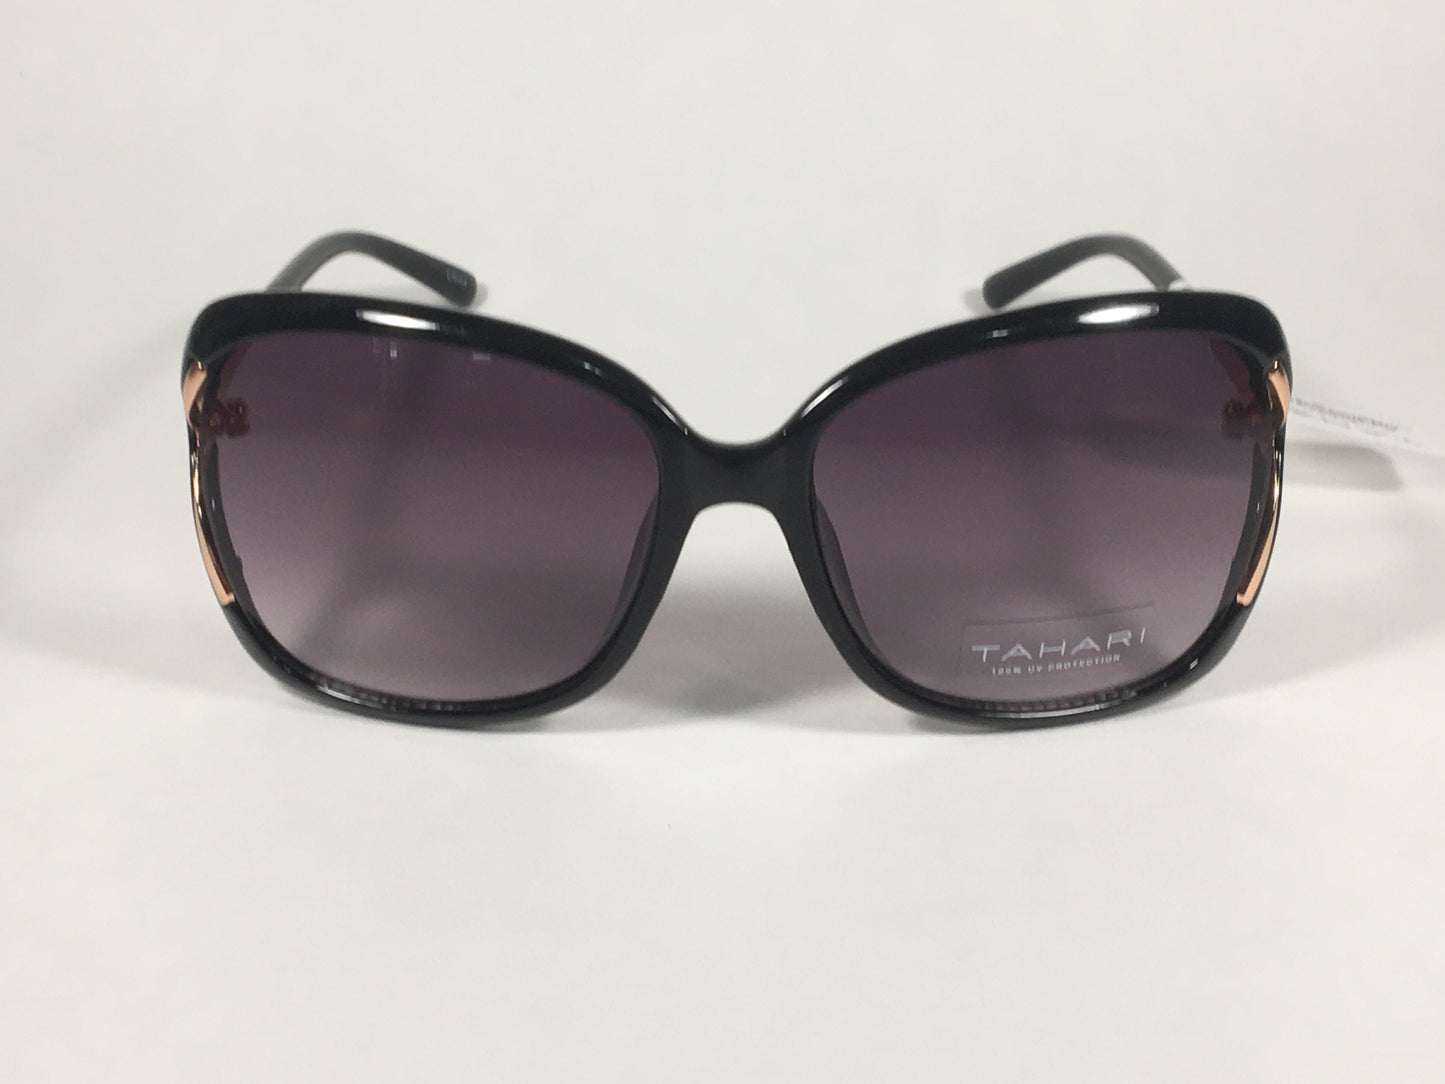 Tahari Vented Butterfly Sunglasses Black Gloss Rose Gold Frame Smoke Gray Gradient Lens TH776 OX - Sunglasses